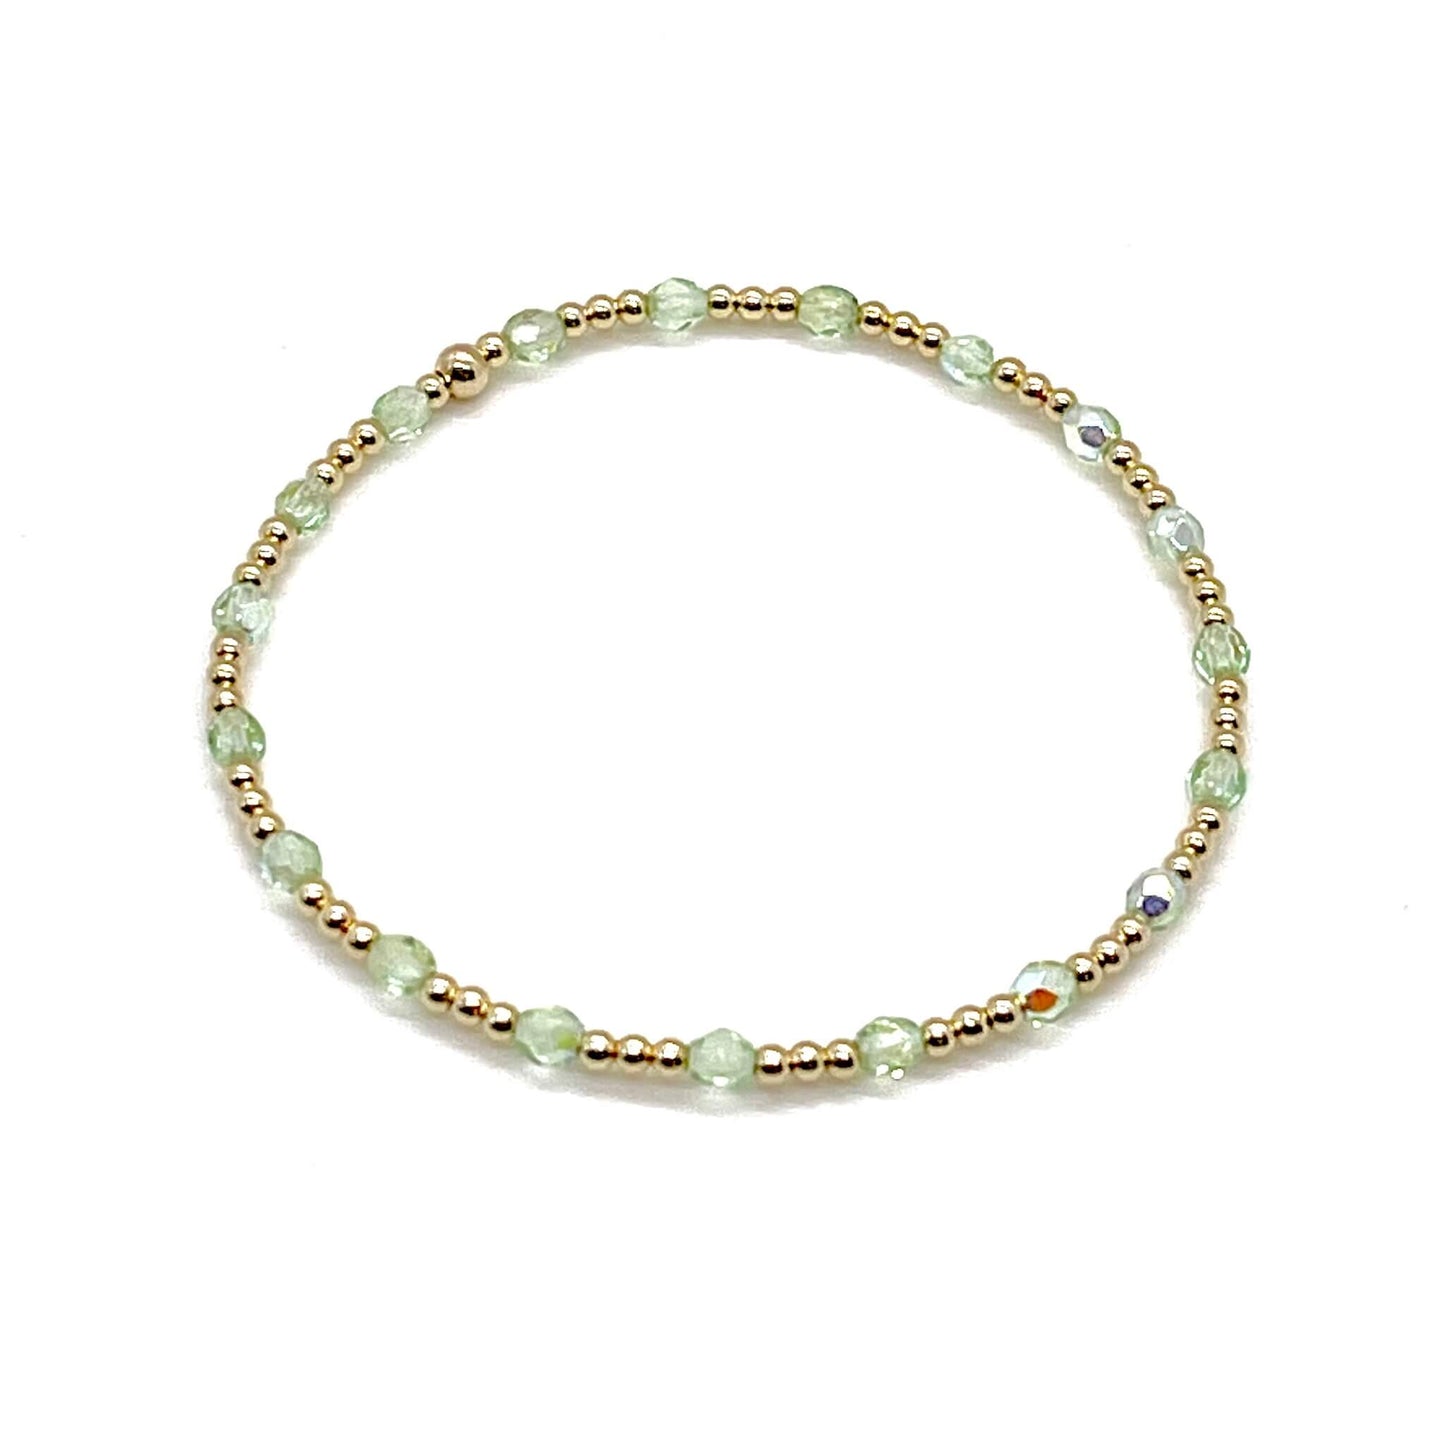 Green crystal bracelet with gold beads. Elegant, 2mm gold filled beaded bracelet for women.